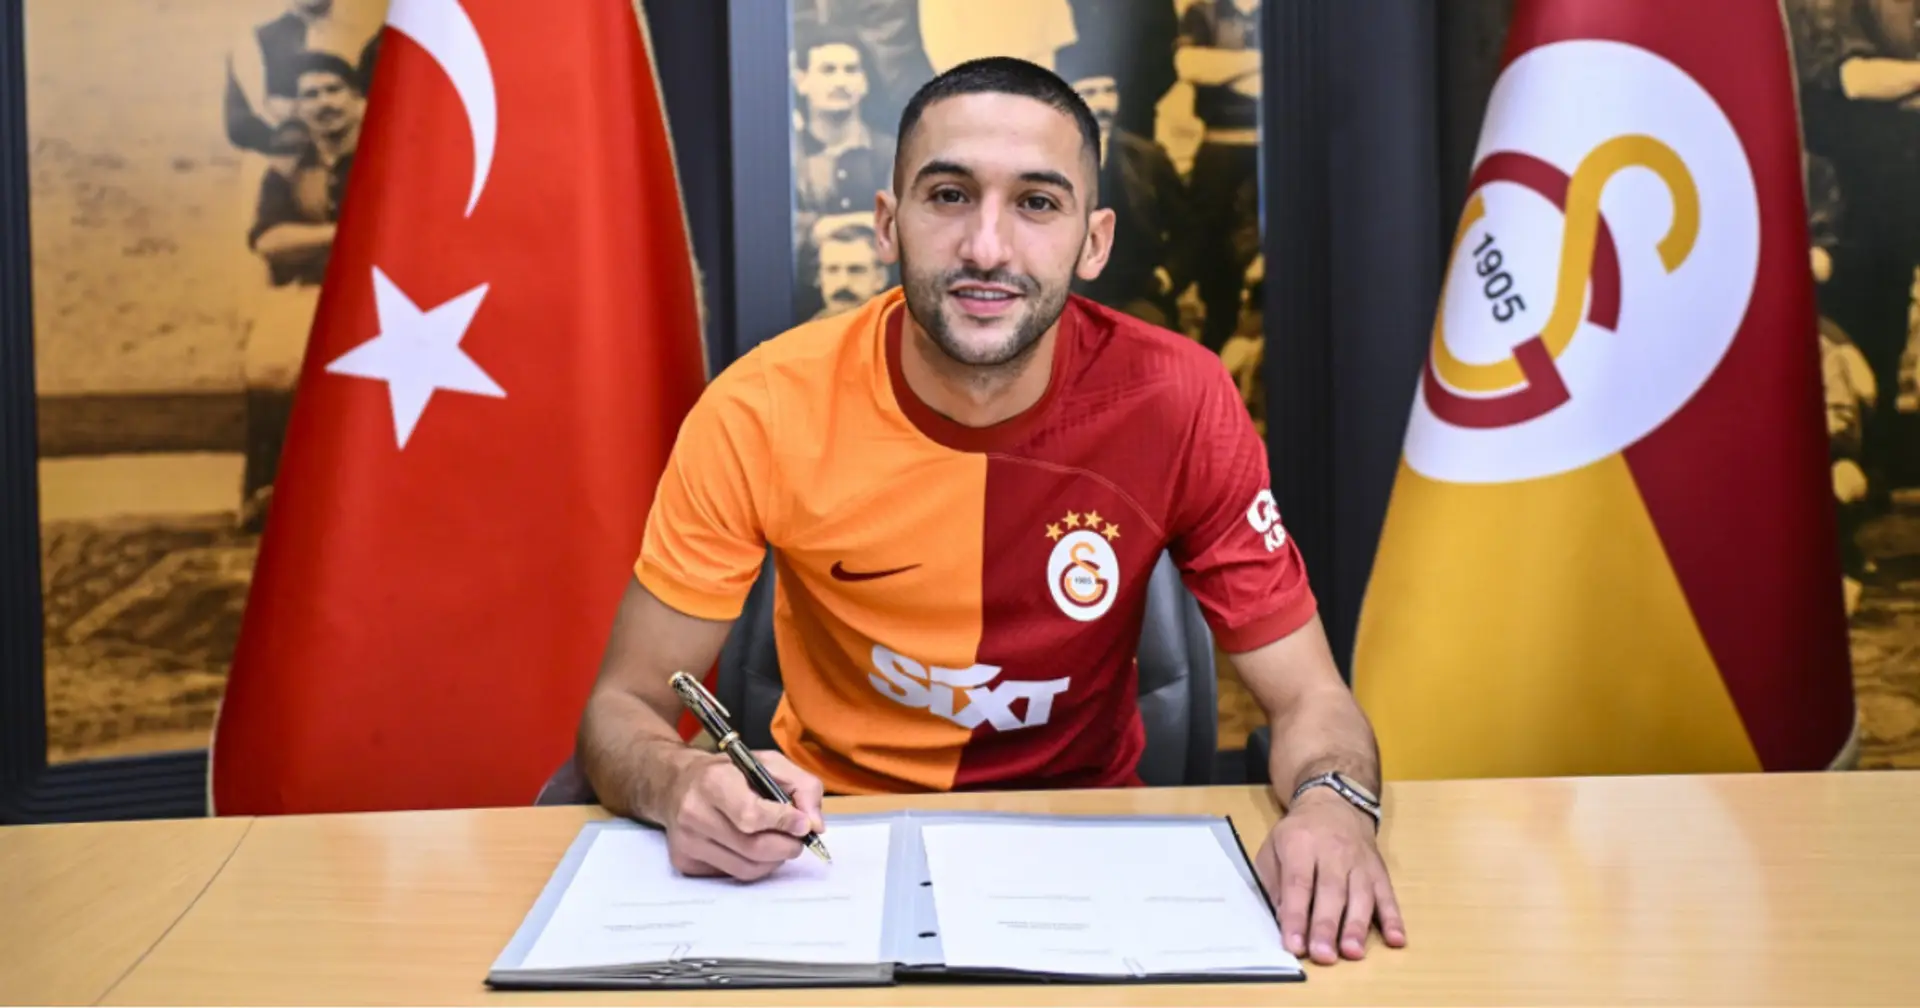 Chelsea confirm Hakim Ziyech move to Galatasaray, clarify loan terms